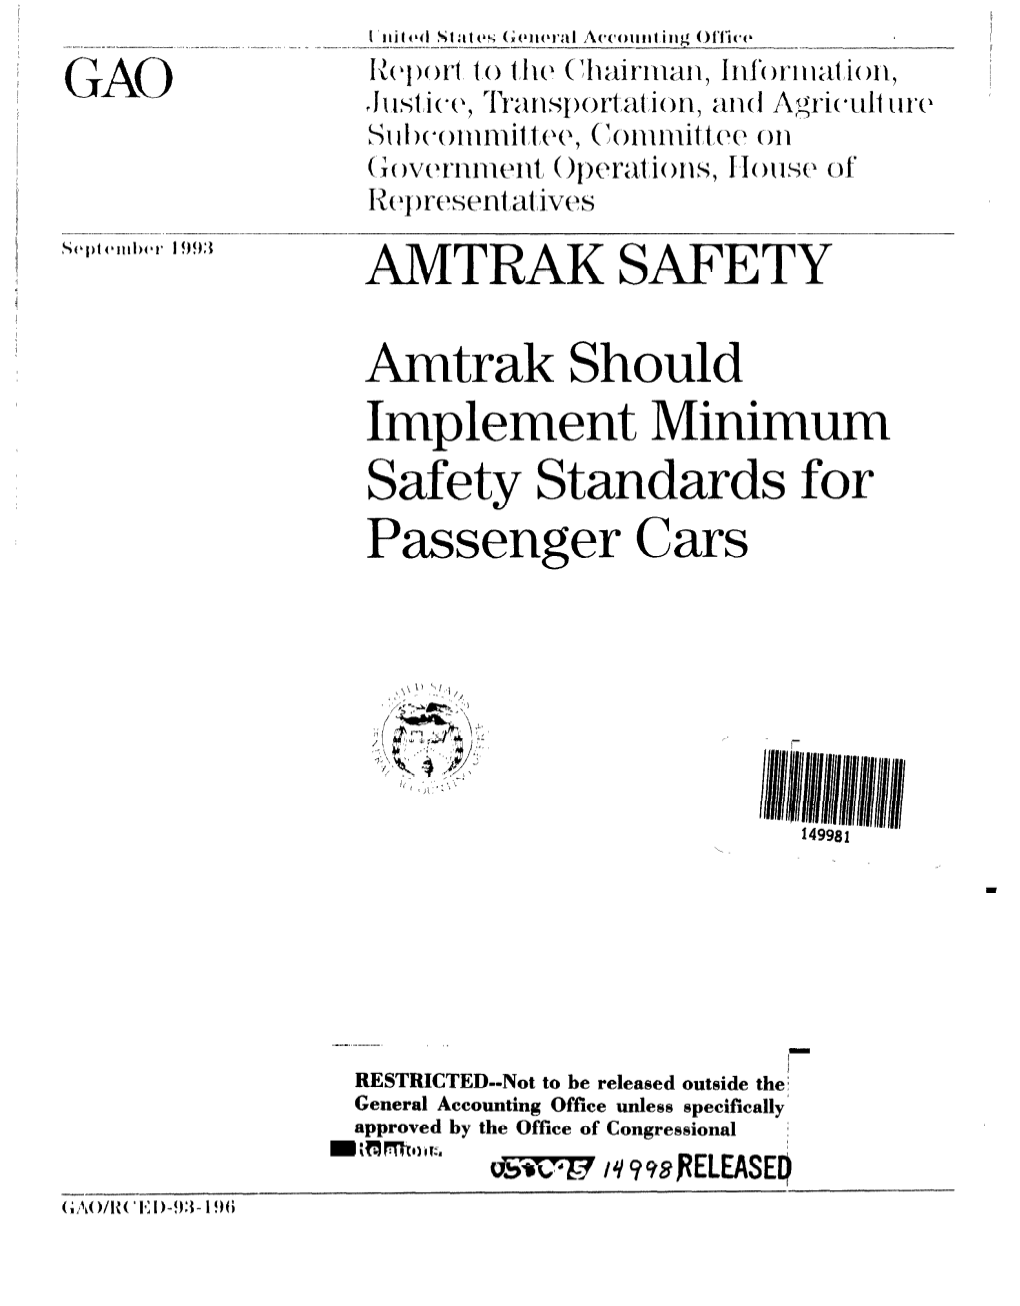 Amtrak Should Implement Minimum Safety Standards for Passenger Cars